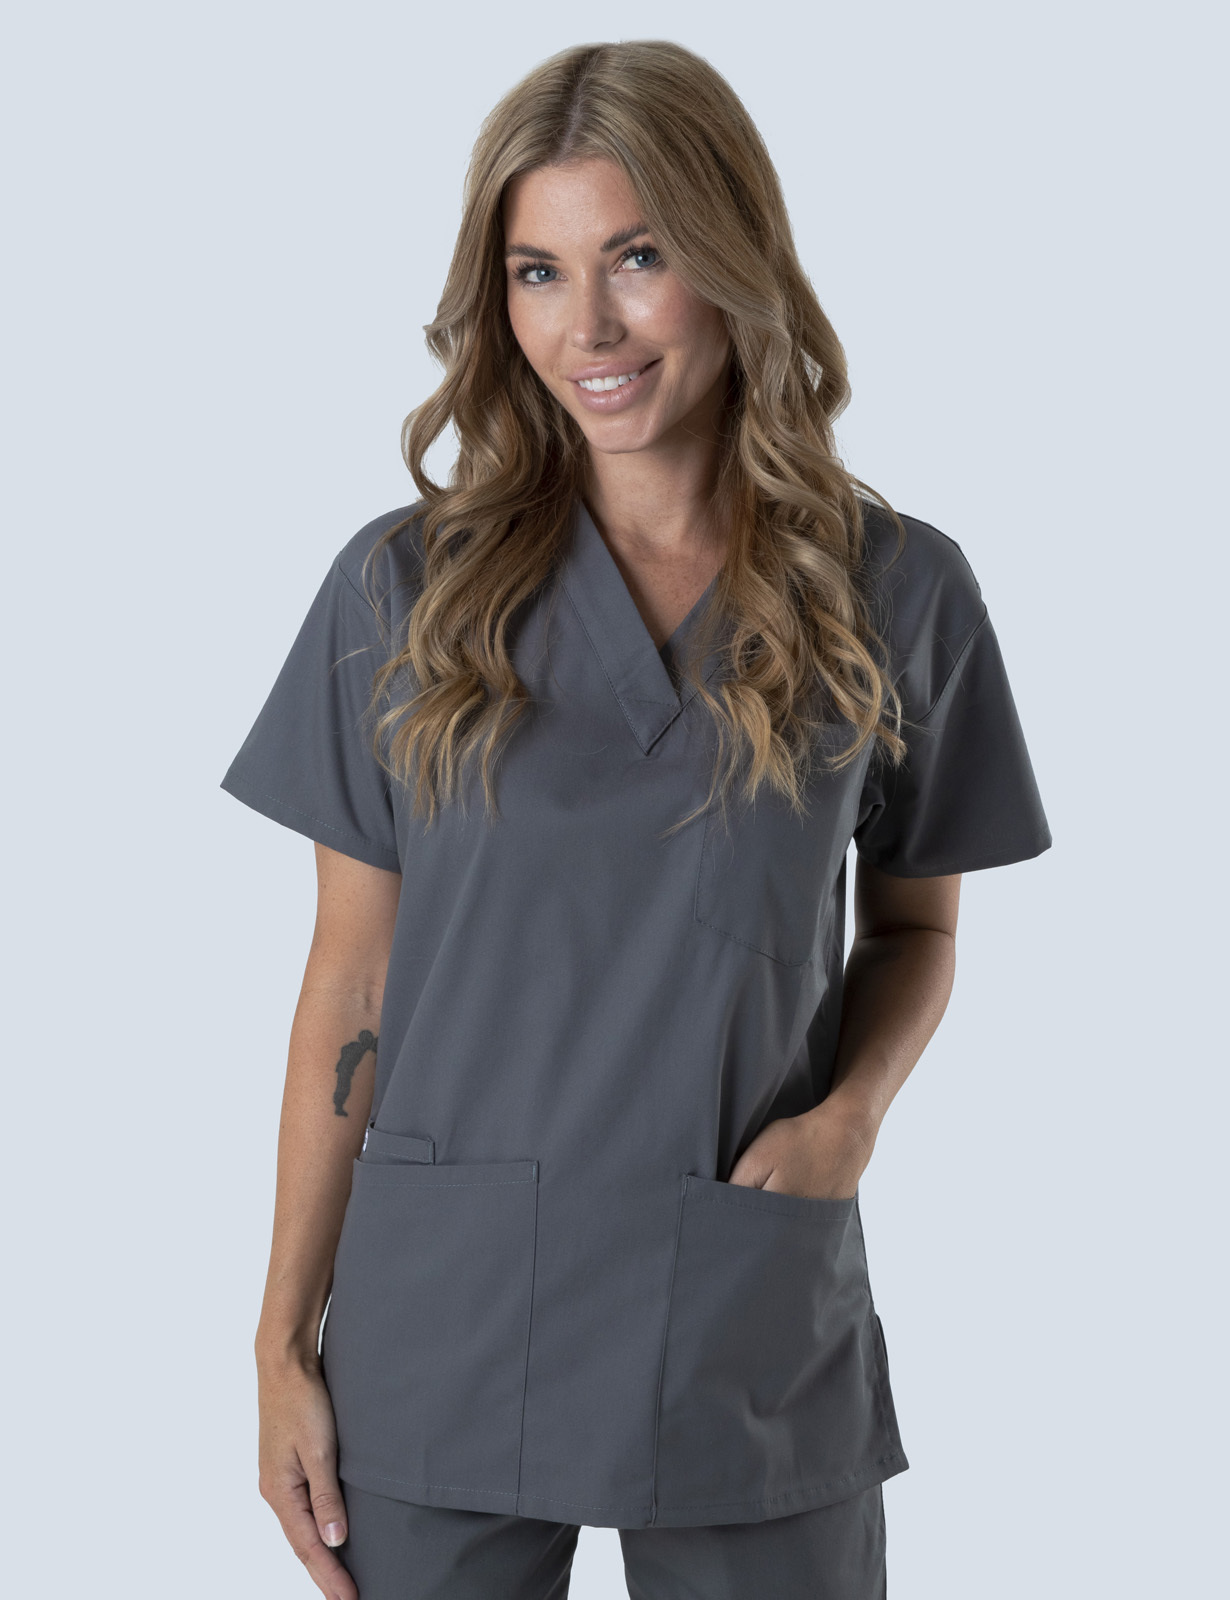 Rockhampton Hospital Emergency Department Enrolled Nurse Set Uniform (4 Pocket Top and cargo Pants in Steel Grey + Logos)